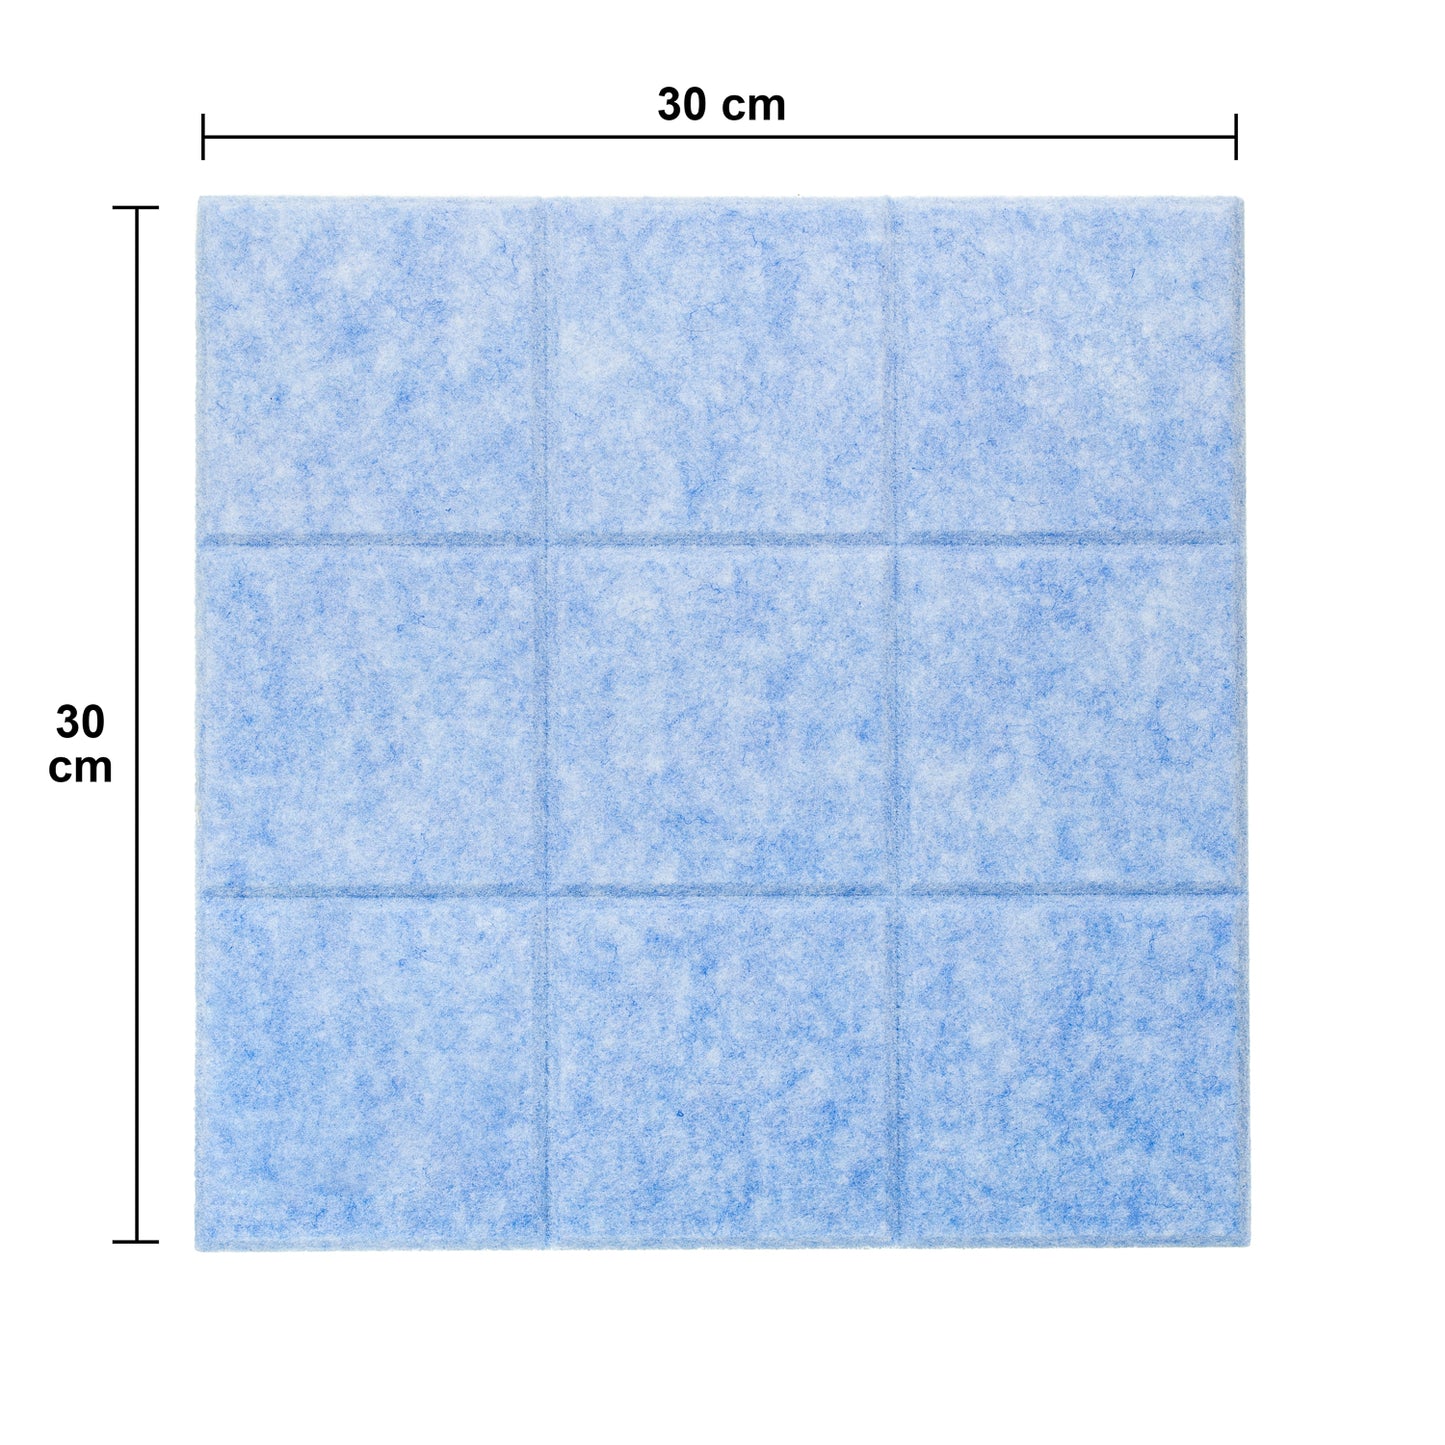 Zelfklevend Vilten Prikbord | Set van 4 Stuks incl. 20 Punaises | Memobord | Wandbord | Wanddecoratie |Vierkant| 1 stuk = 30 x 30 x 1 cm | Blauw